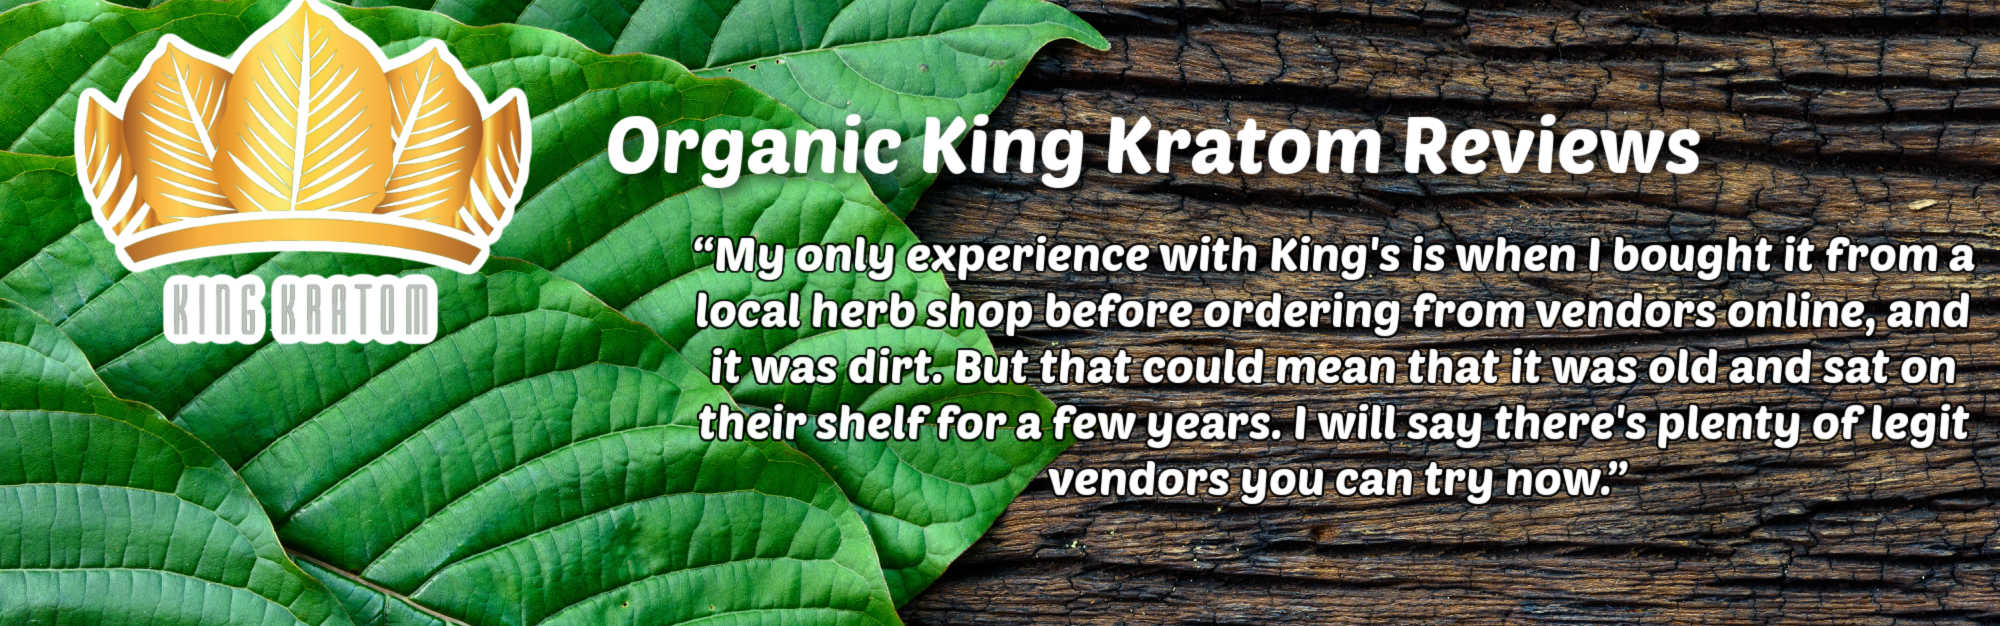 image of king kratom customer reviews